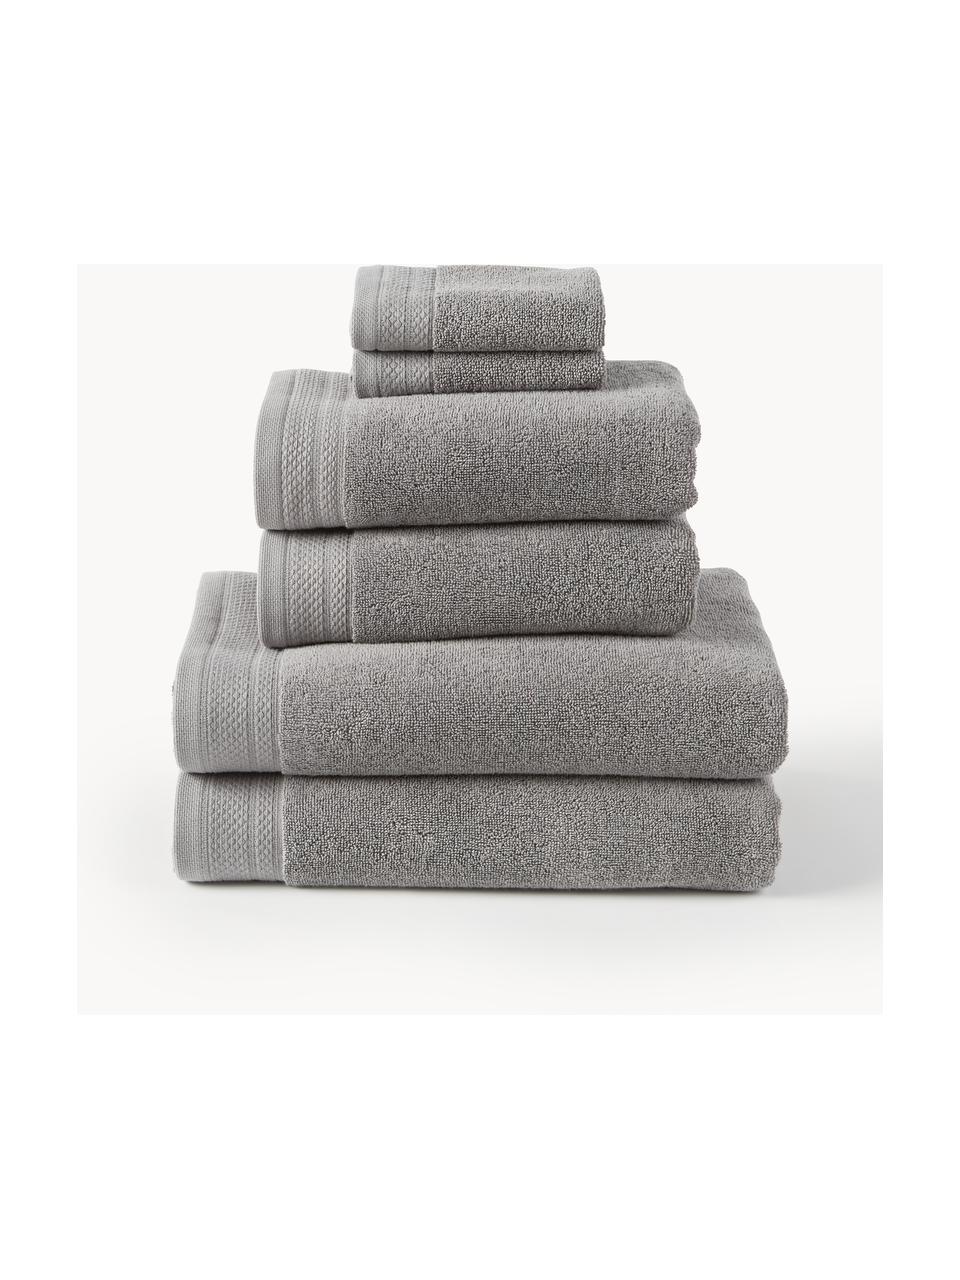 Set de toallas de algodón ecológico Premium, tamaños diferentes, 100% algodón ecológico con certificado GOTS (por GCL International, GCL-300517)
Gramaje superior 600 g/m², Gris oscuro, Set de 4 (toalla lavabo y toalla ducha)